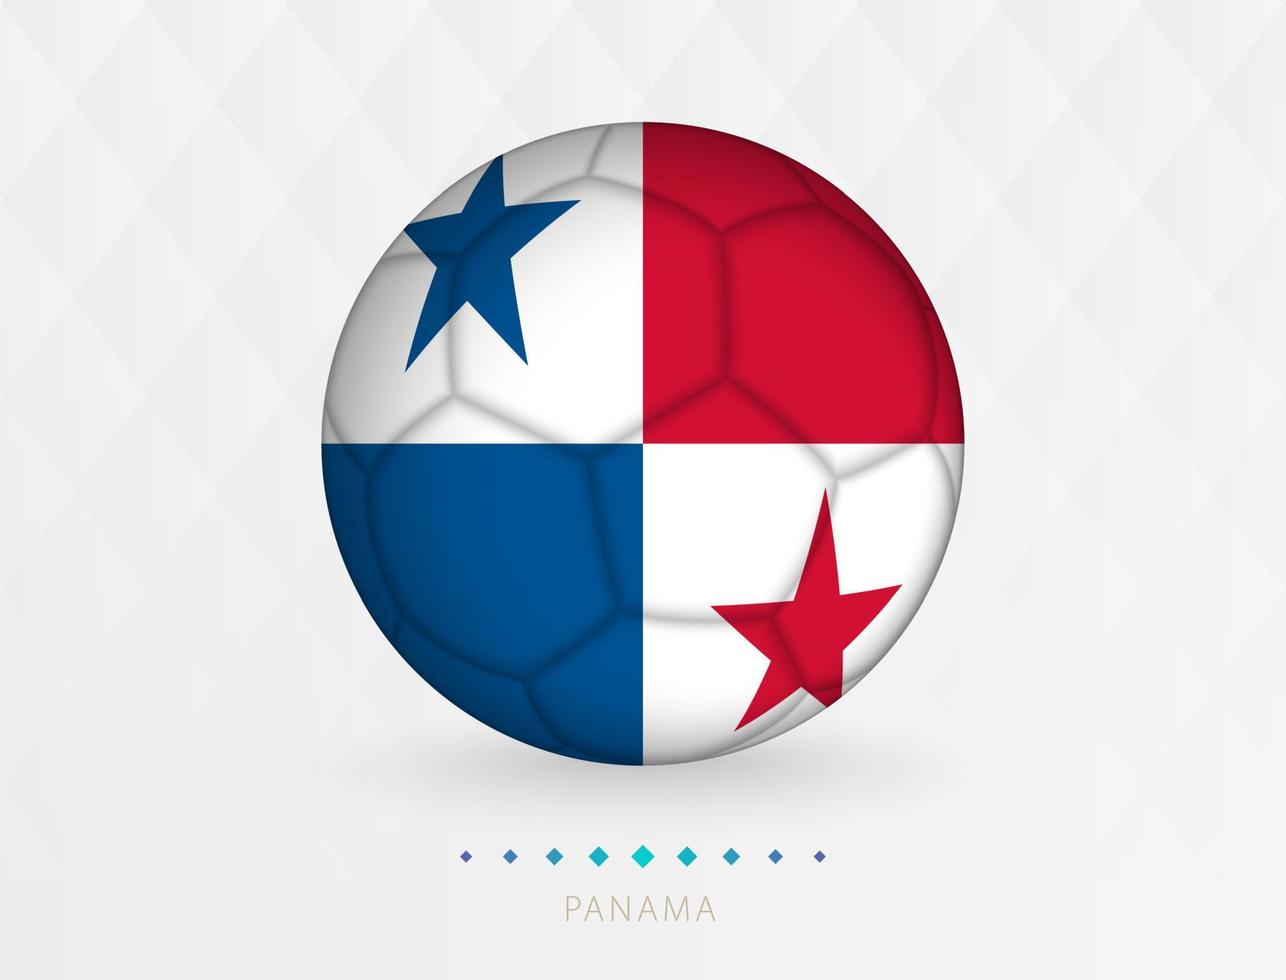 Football ball with Panama flag pattern, soccer ball with flag of Panama national team. vector